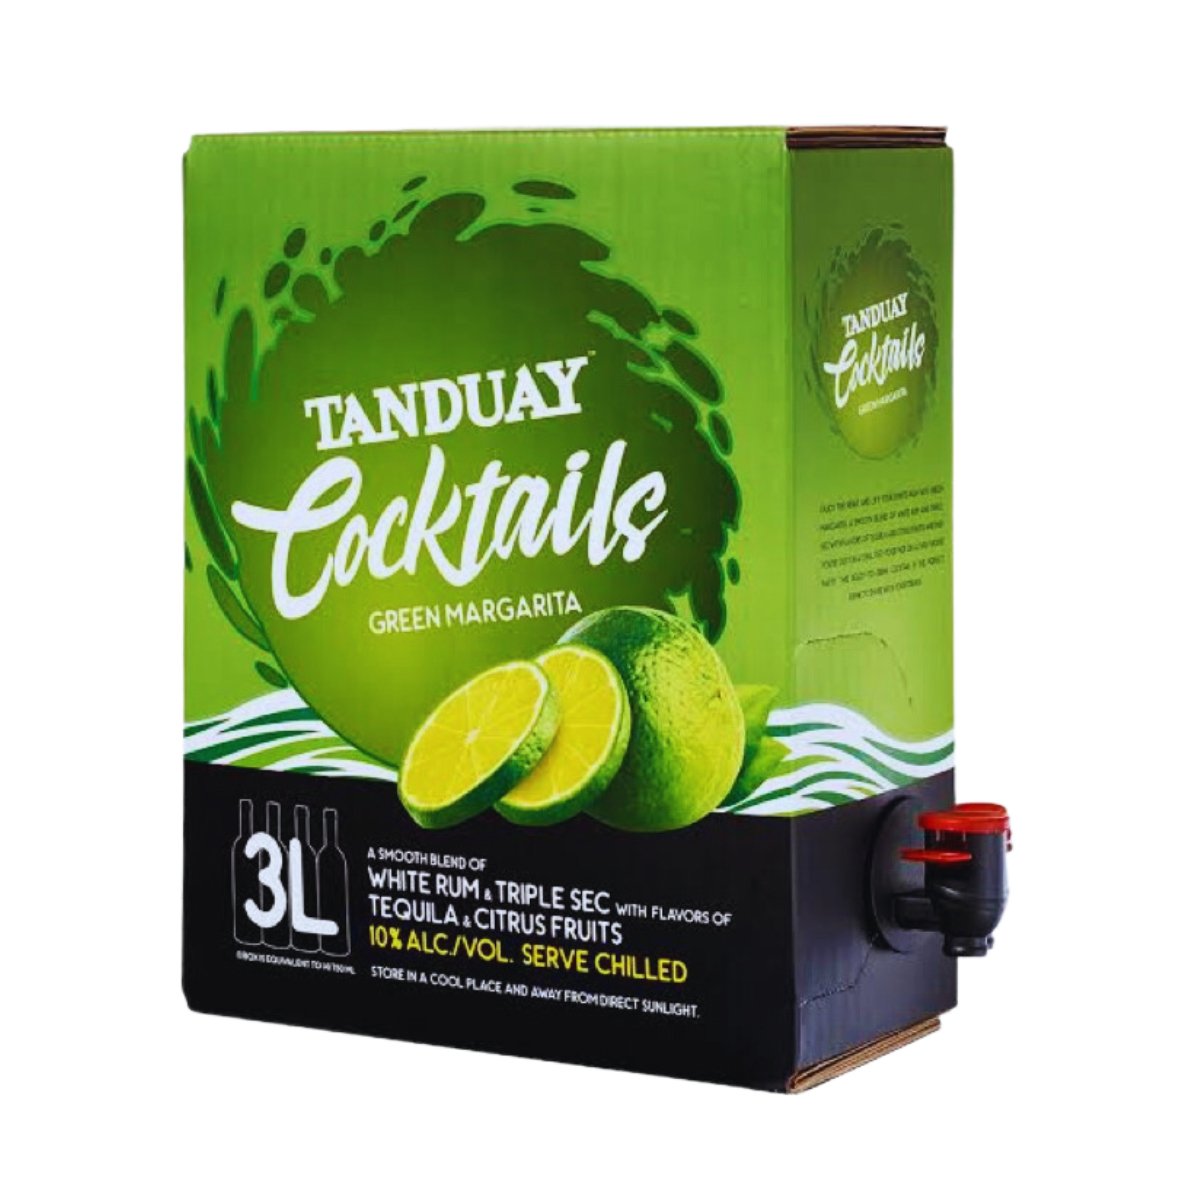 Tanduay Cocktails Green Margarita 3L - Happy Hour